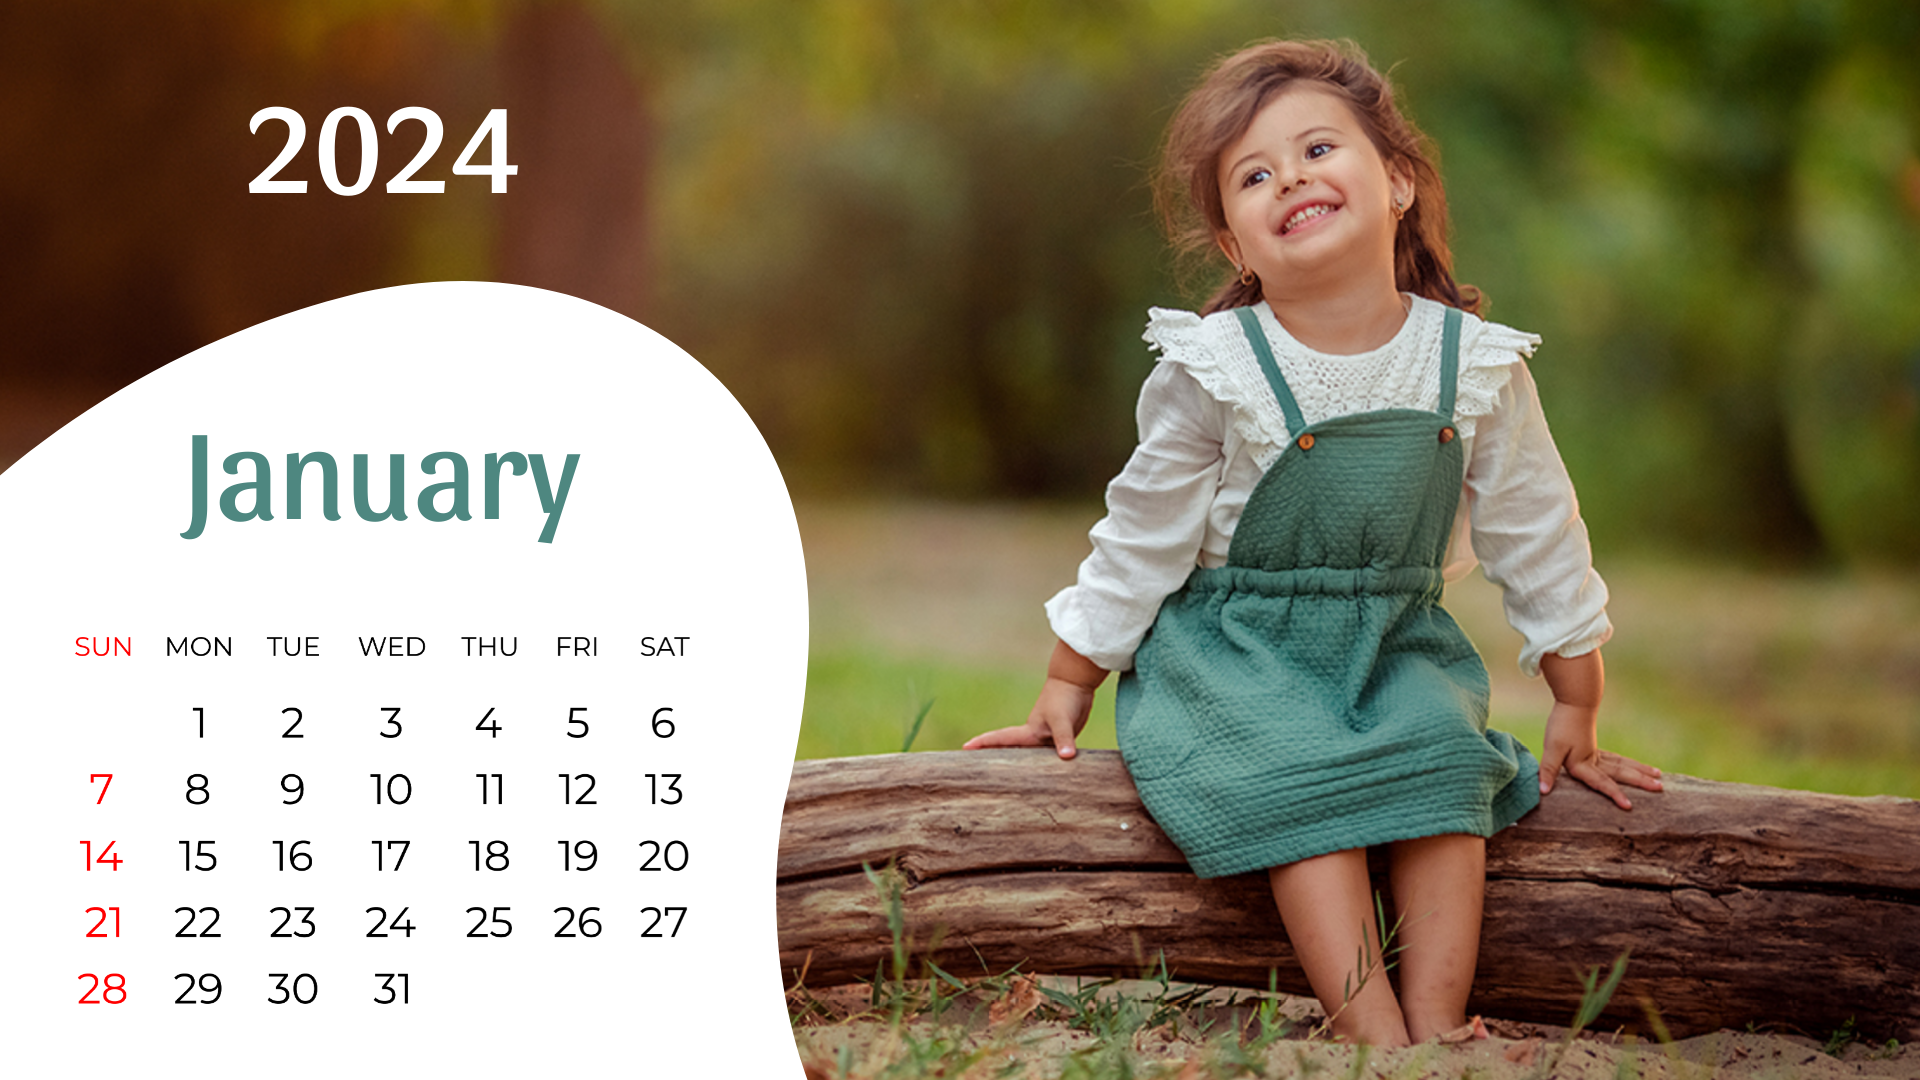 Kids Calendar Template with Creative Layout